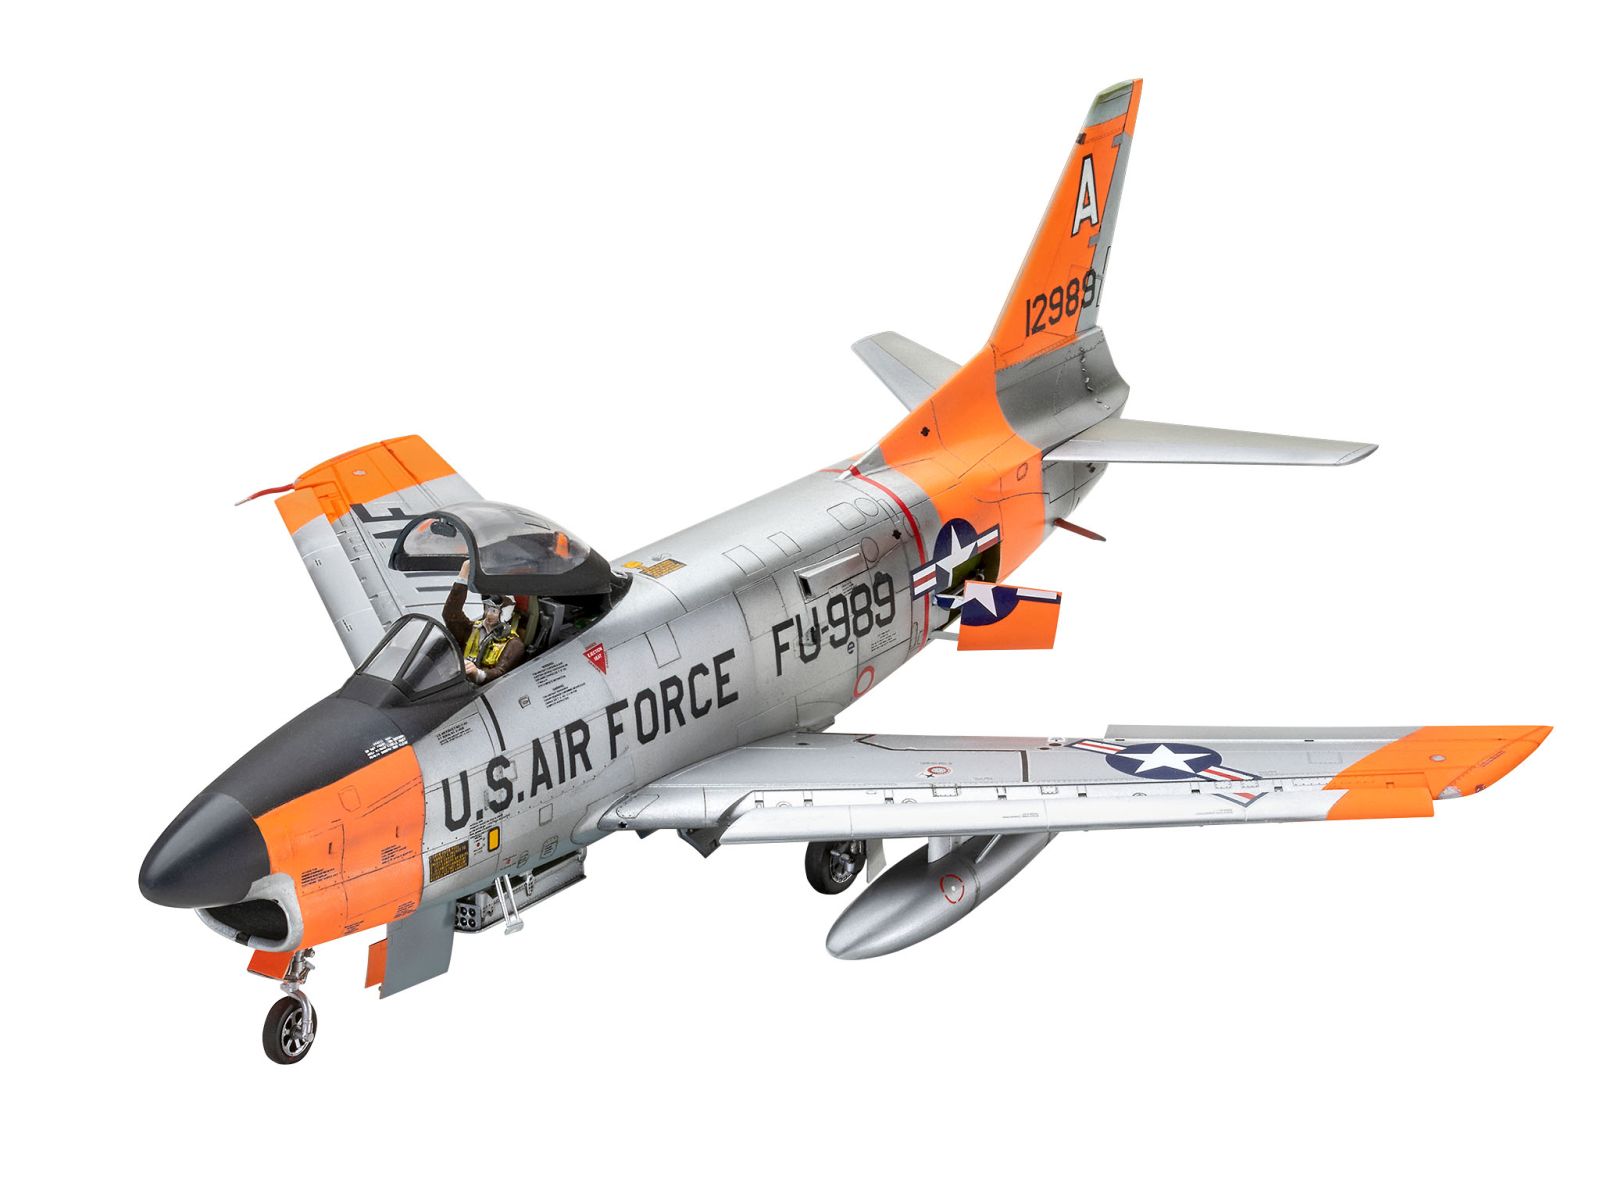 Revell 03832 - F-86D "Dog Sabre"